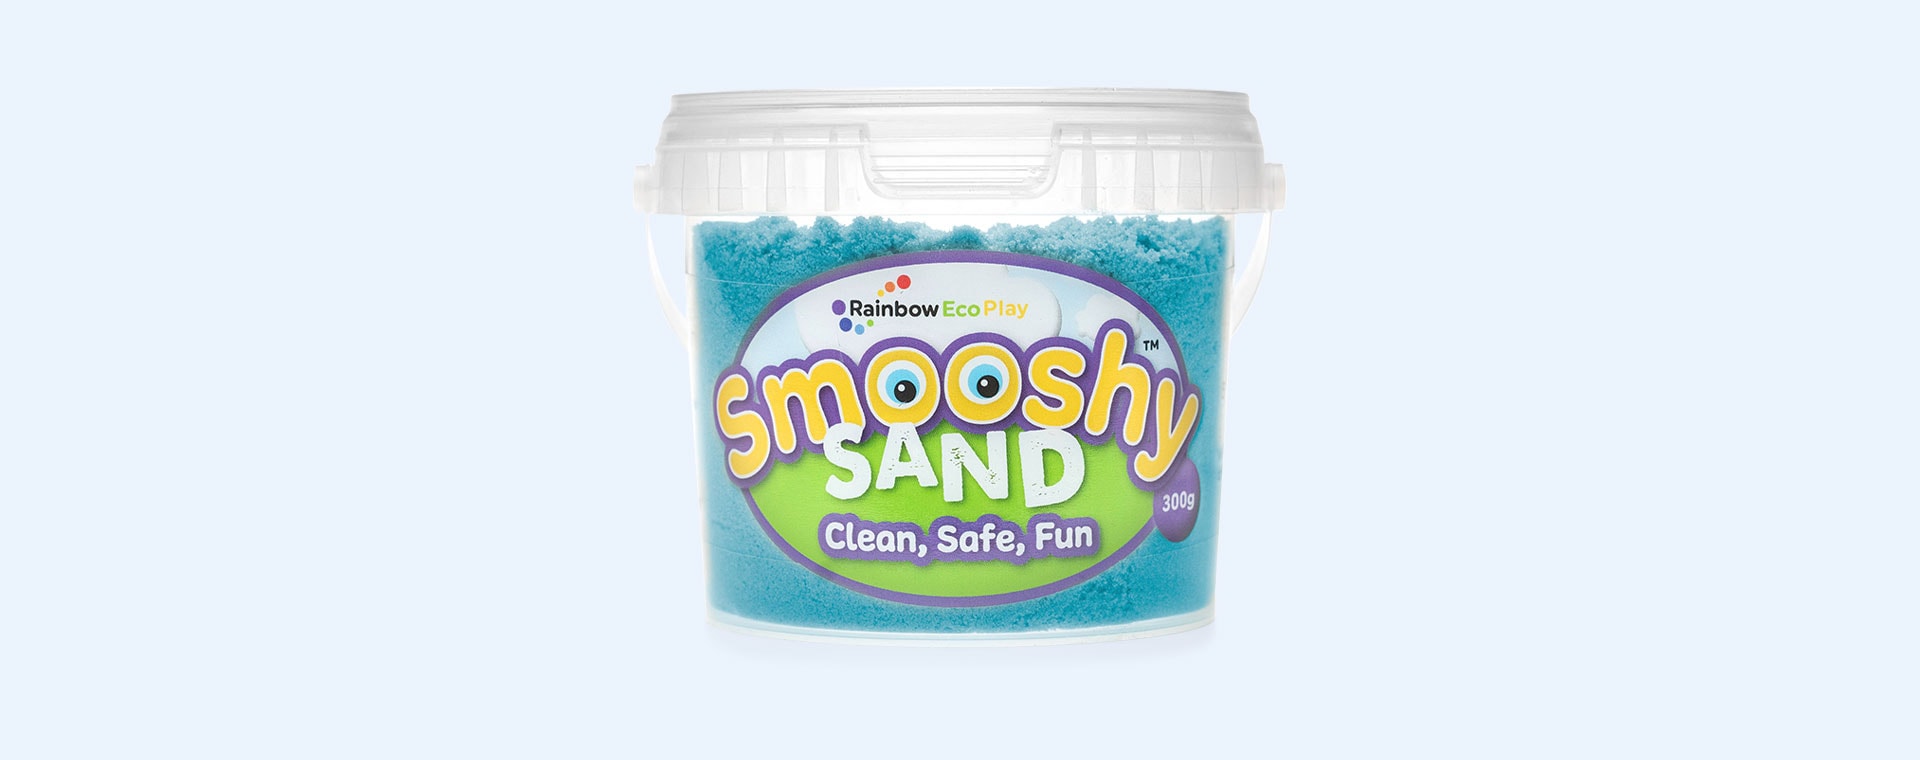 Blue Rainbow Eco Play Smooshy Kinetic Magic Sand 300g